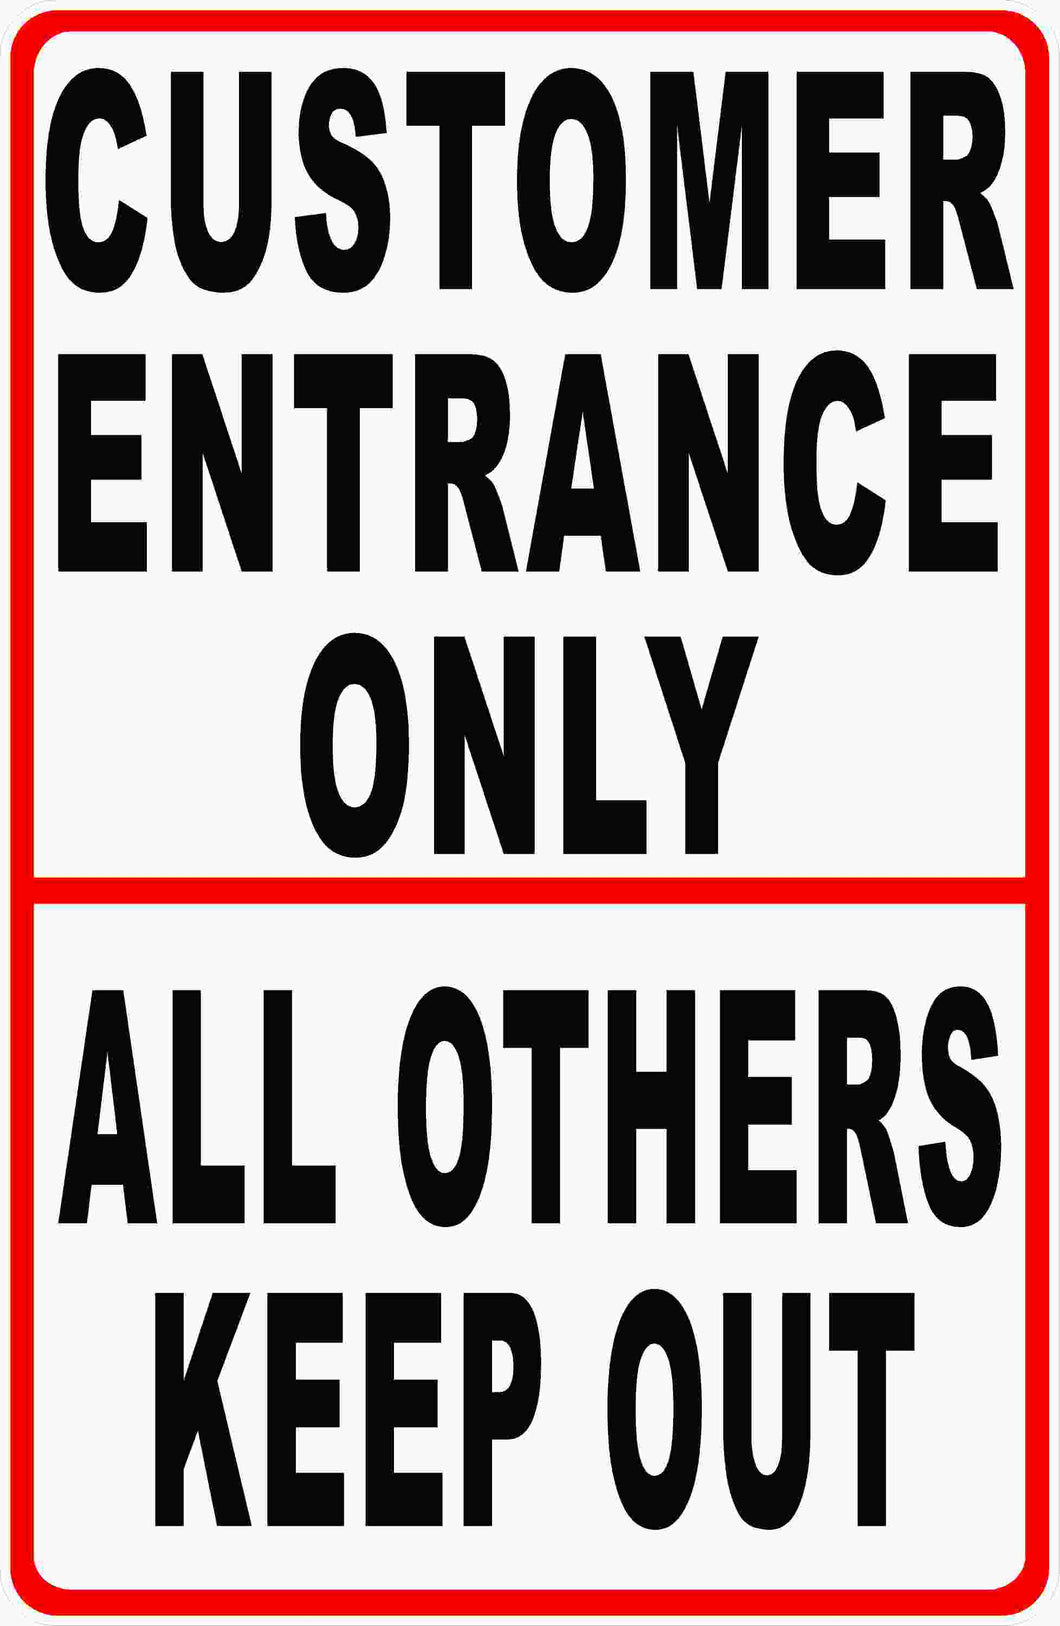 Customer Entrance Sign